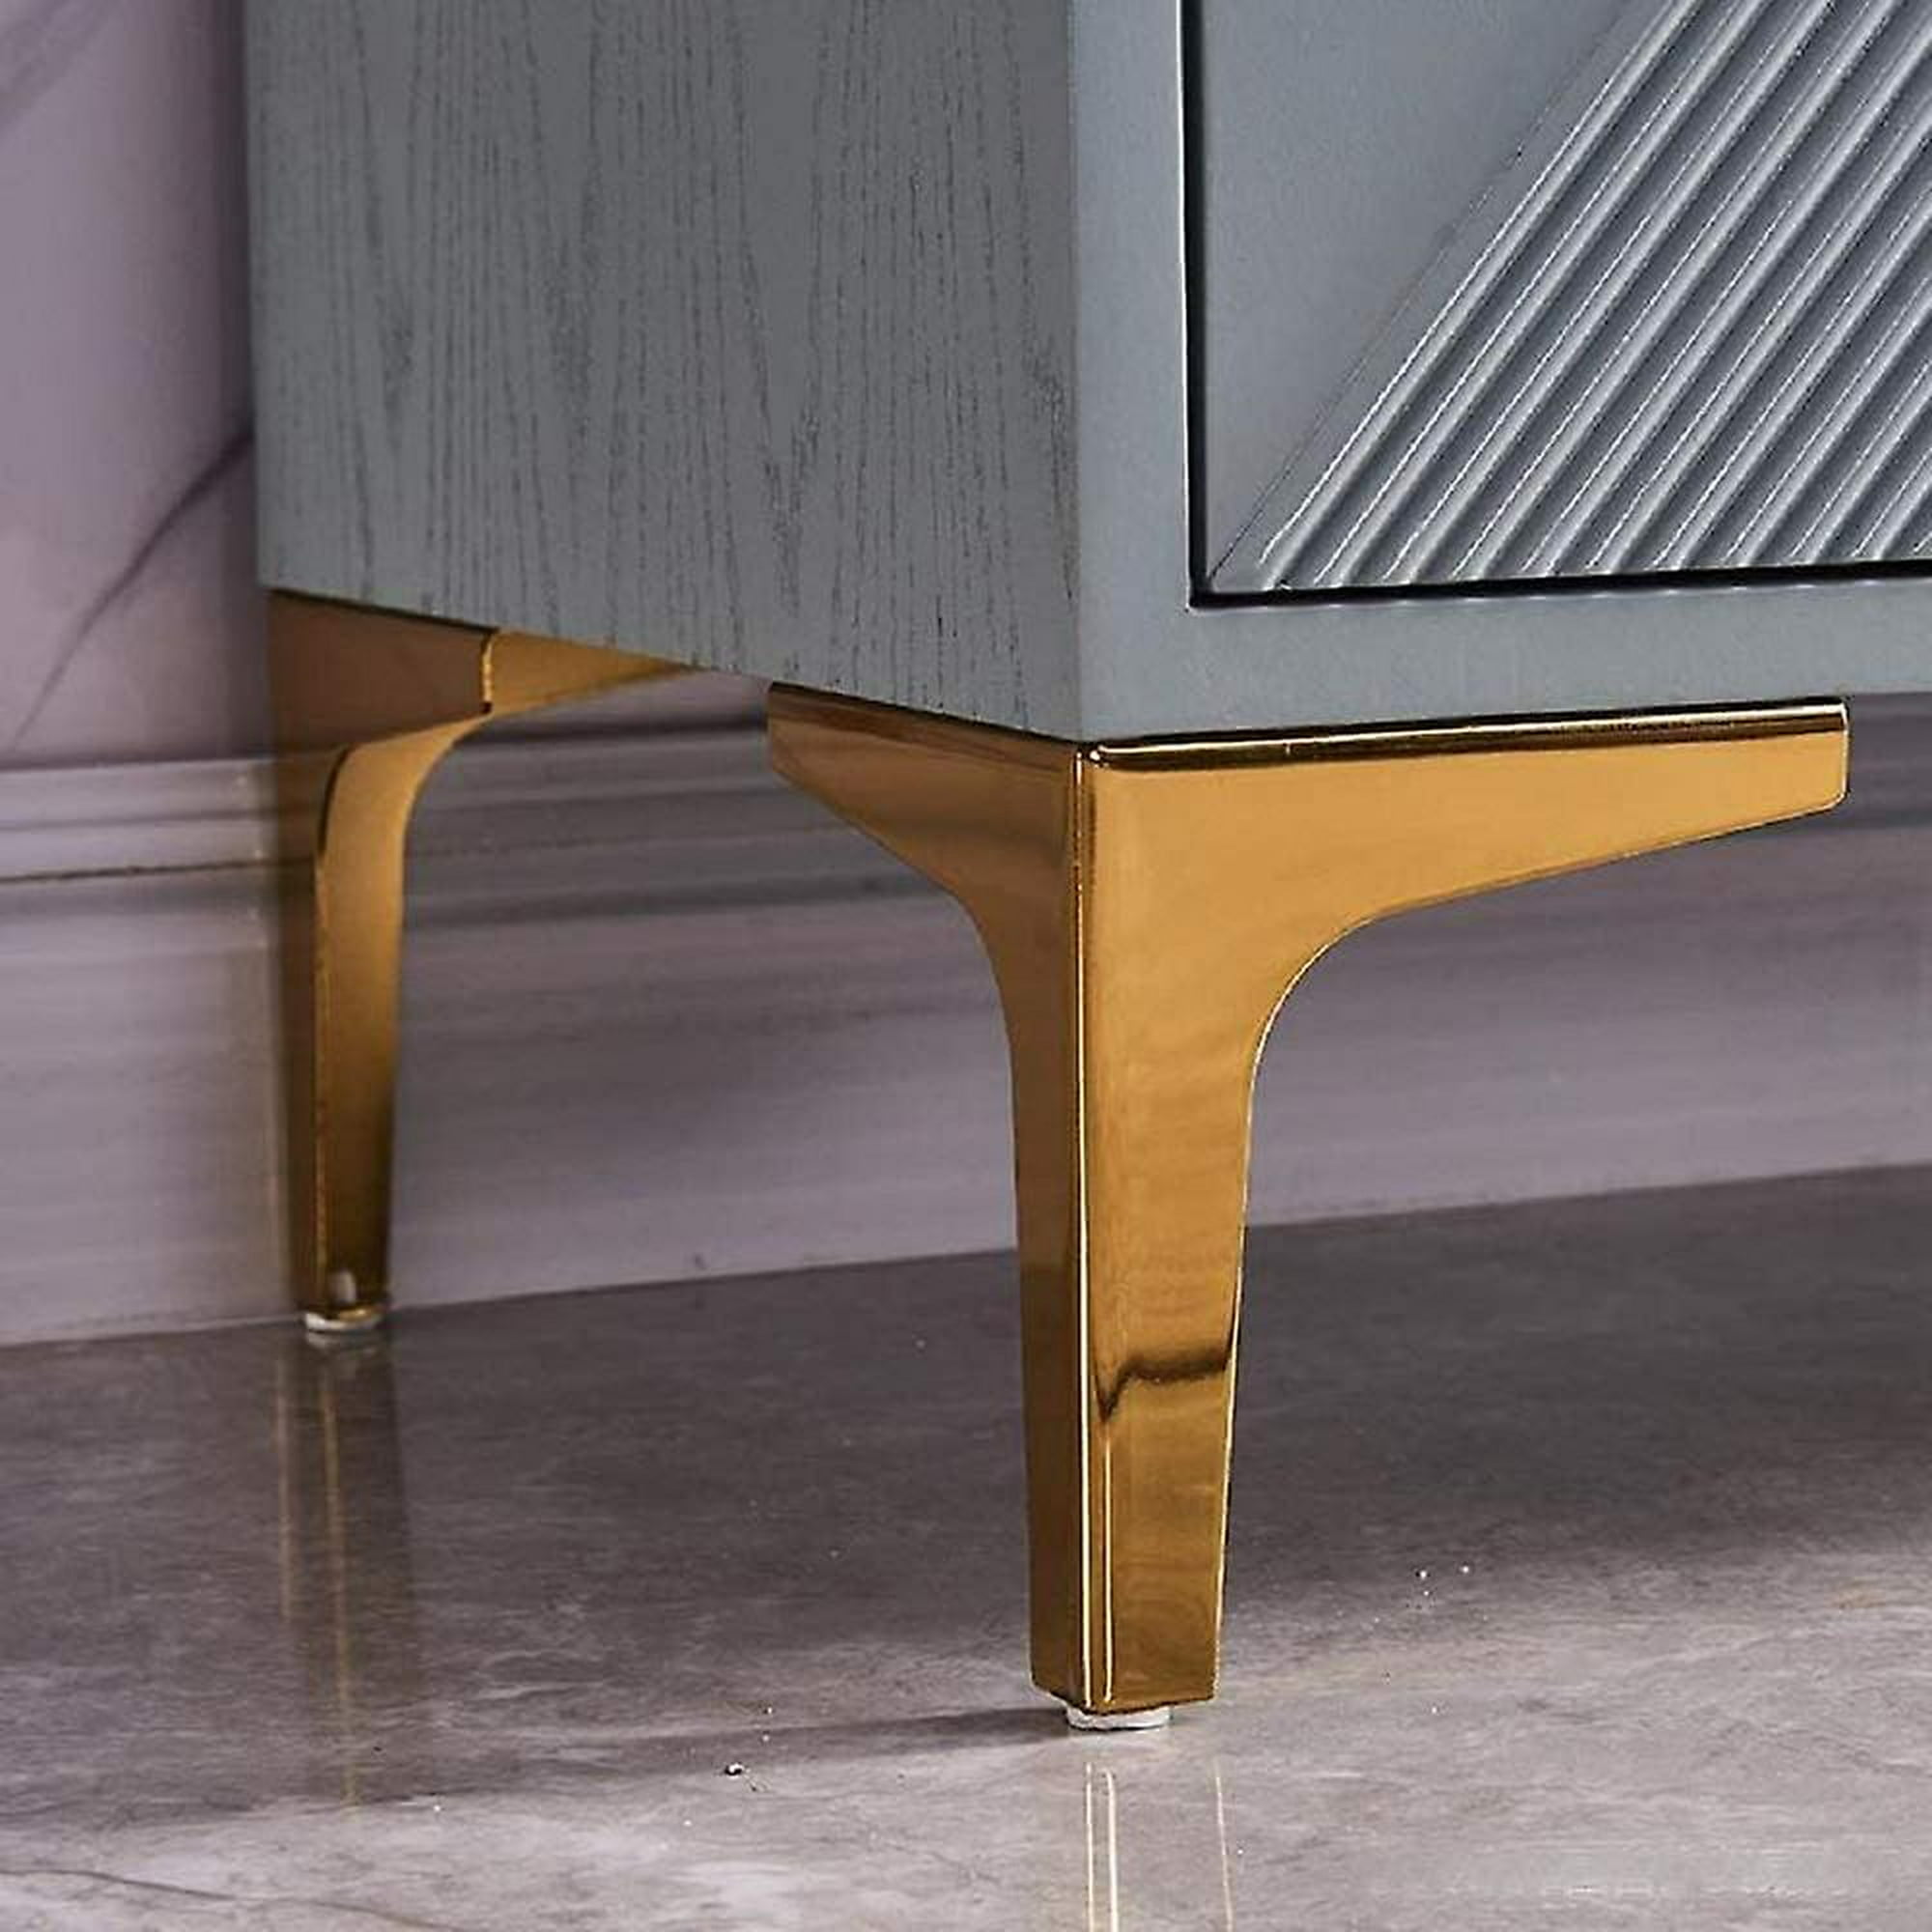  Omgbd Patas de aluminio para muebles de gabinete, patas de  soporte para mesa de centro doradas, soporte de carga de 1,322.8 lbs,  adecuadas para sofá, mueble de TV, cama (color dorado